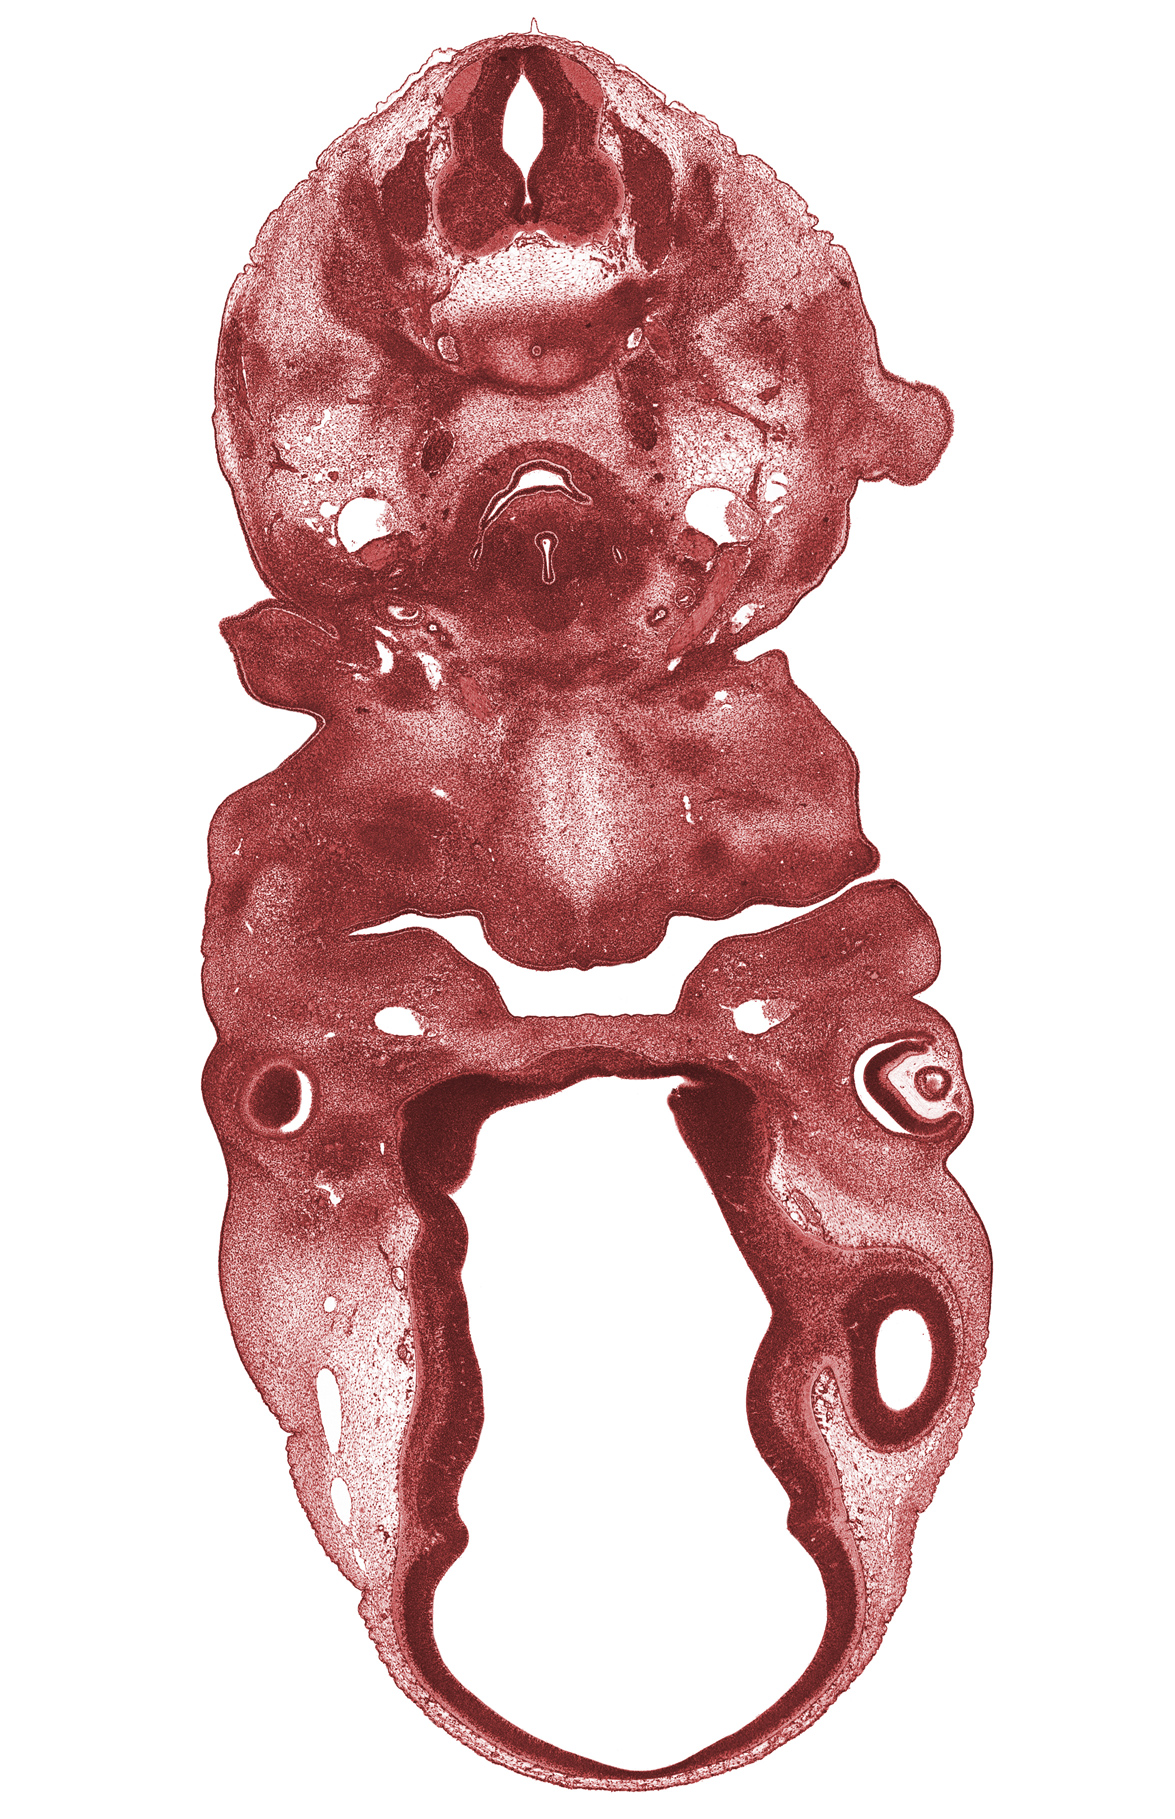 C-6 spinal ganglion, C-6 spinal nerve, C-7 spinal ganglion, aortic arch 4 (aortic arch), brachial plexus, central canal, edge of optic cup, lamina terminalis, maxillary prominence of pharyngeal arch 1, maxillary vein, optic stalk lumen (CN II), pre-optic area, precardinal vein, primordial oral vestibule, primordial palatine shelf, right common carotid artery, shoulder region, sympathetic trunk, telencephalon, thymus gland, transition region